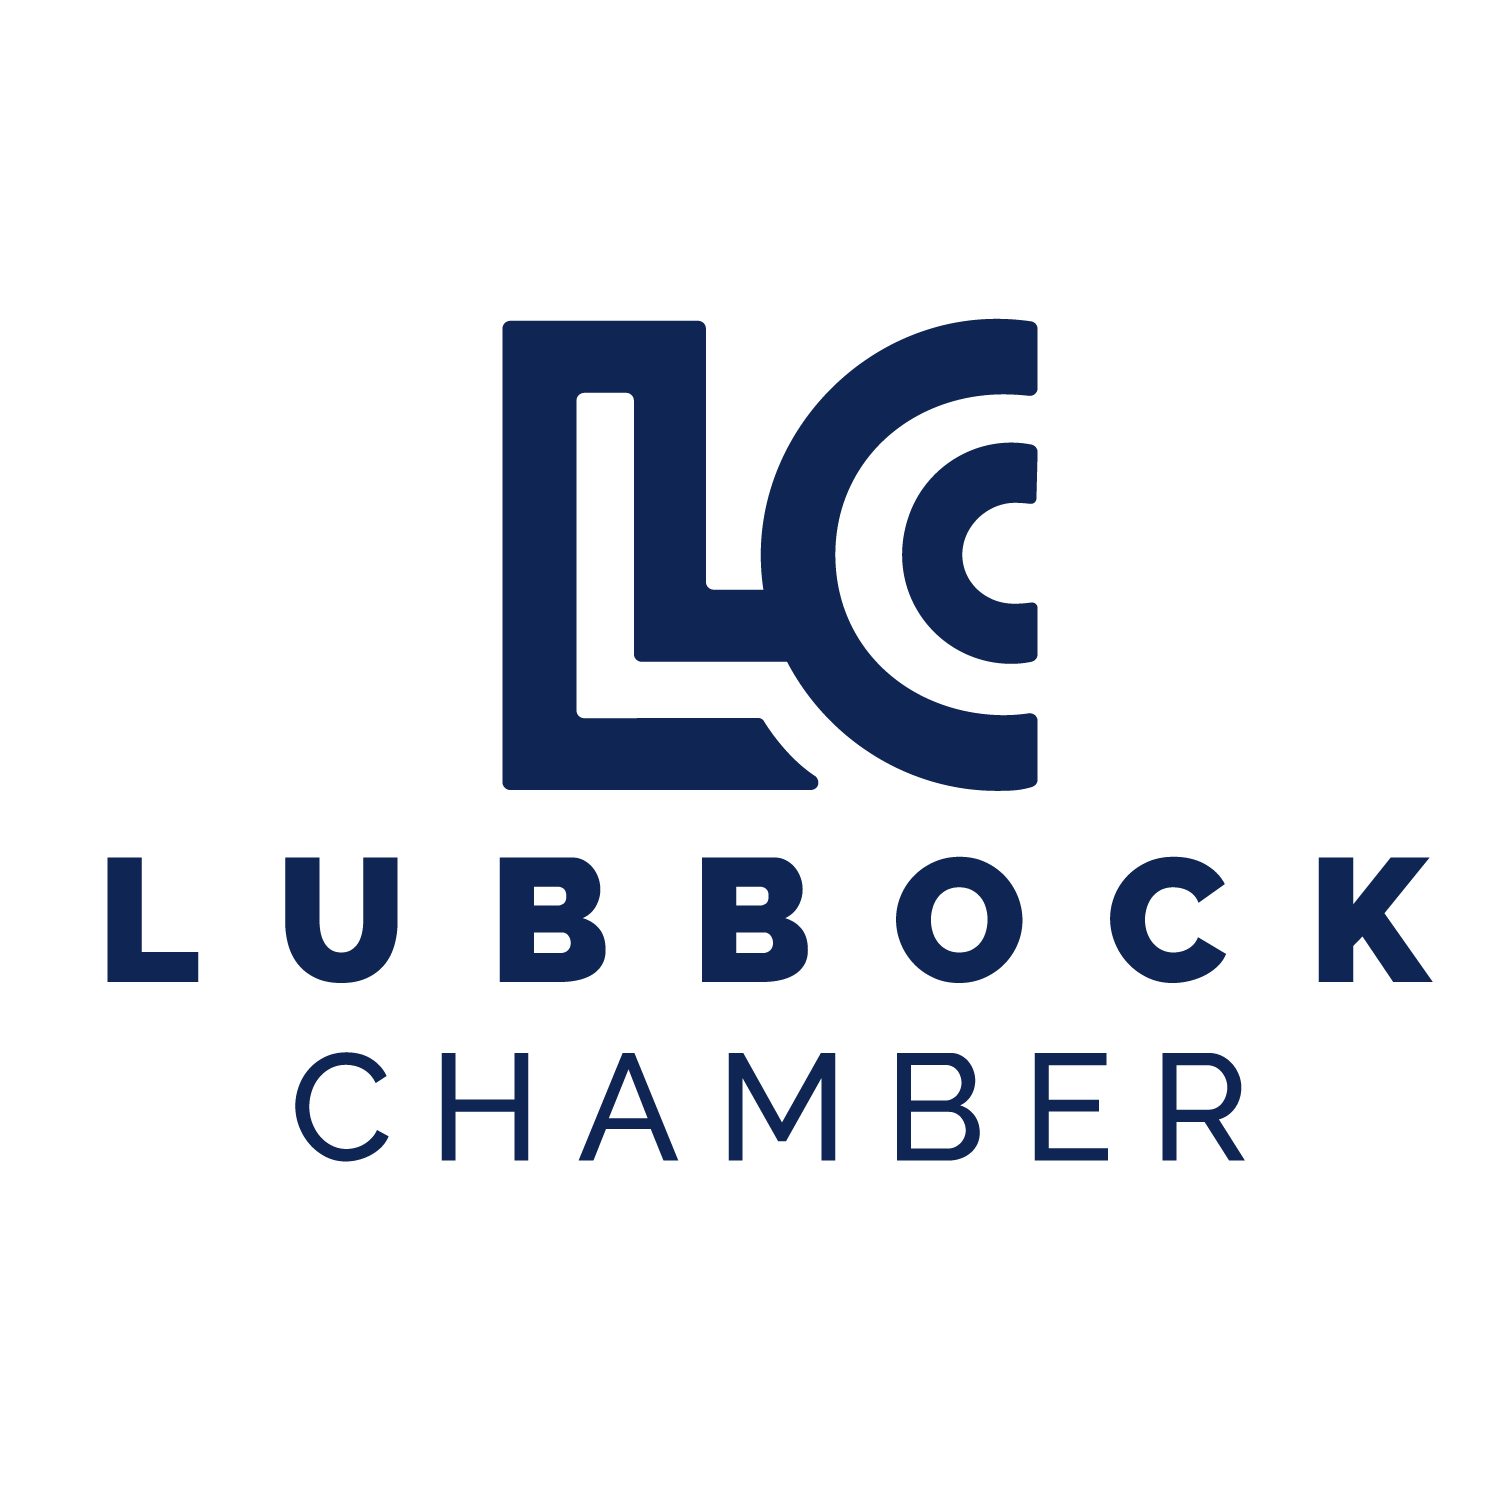 Lubbock Chamber_Vertical_Navy